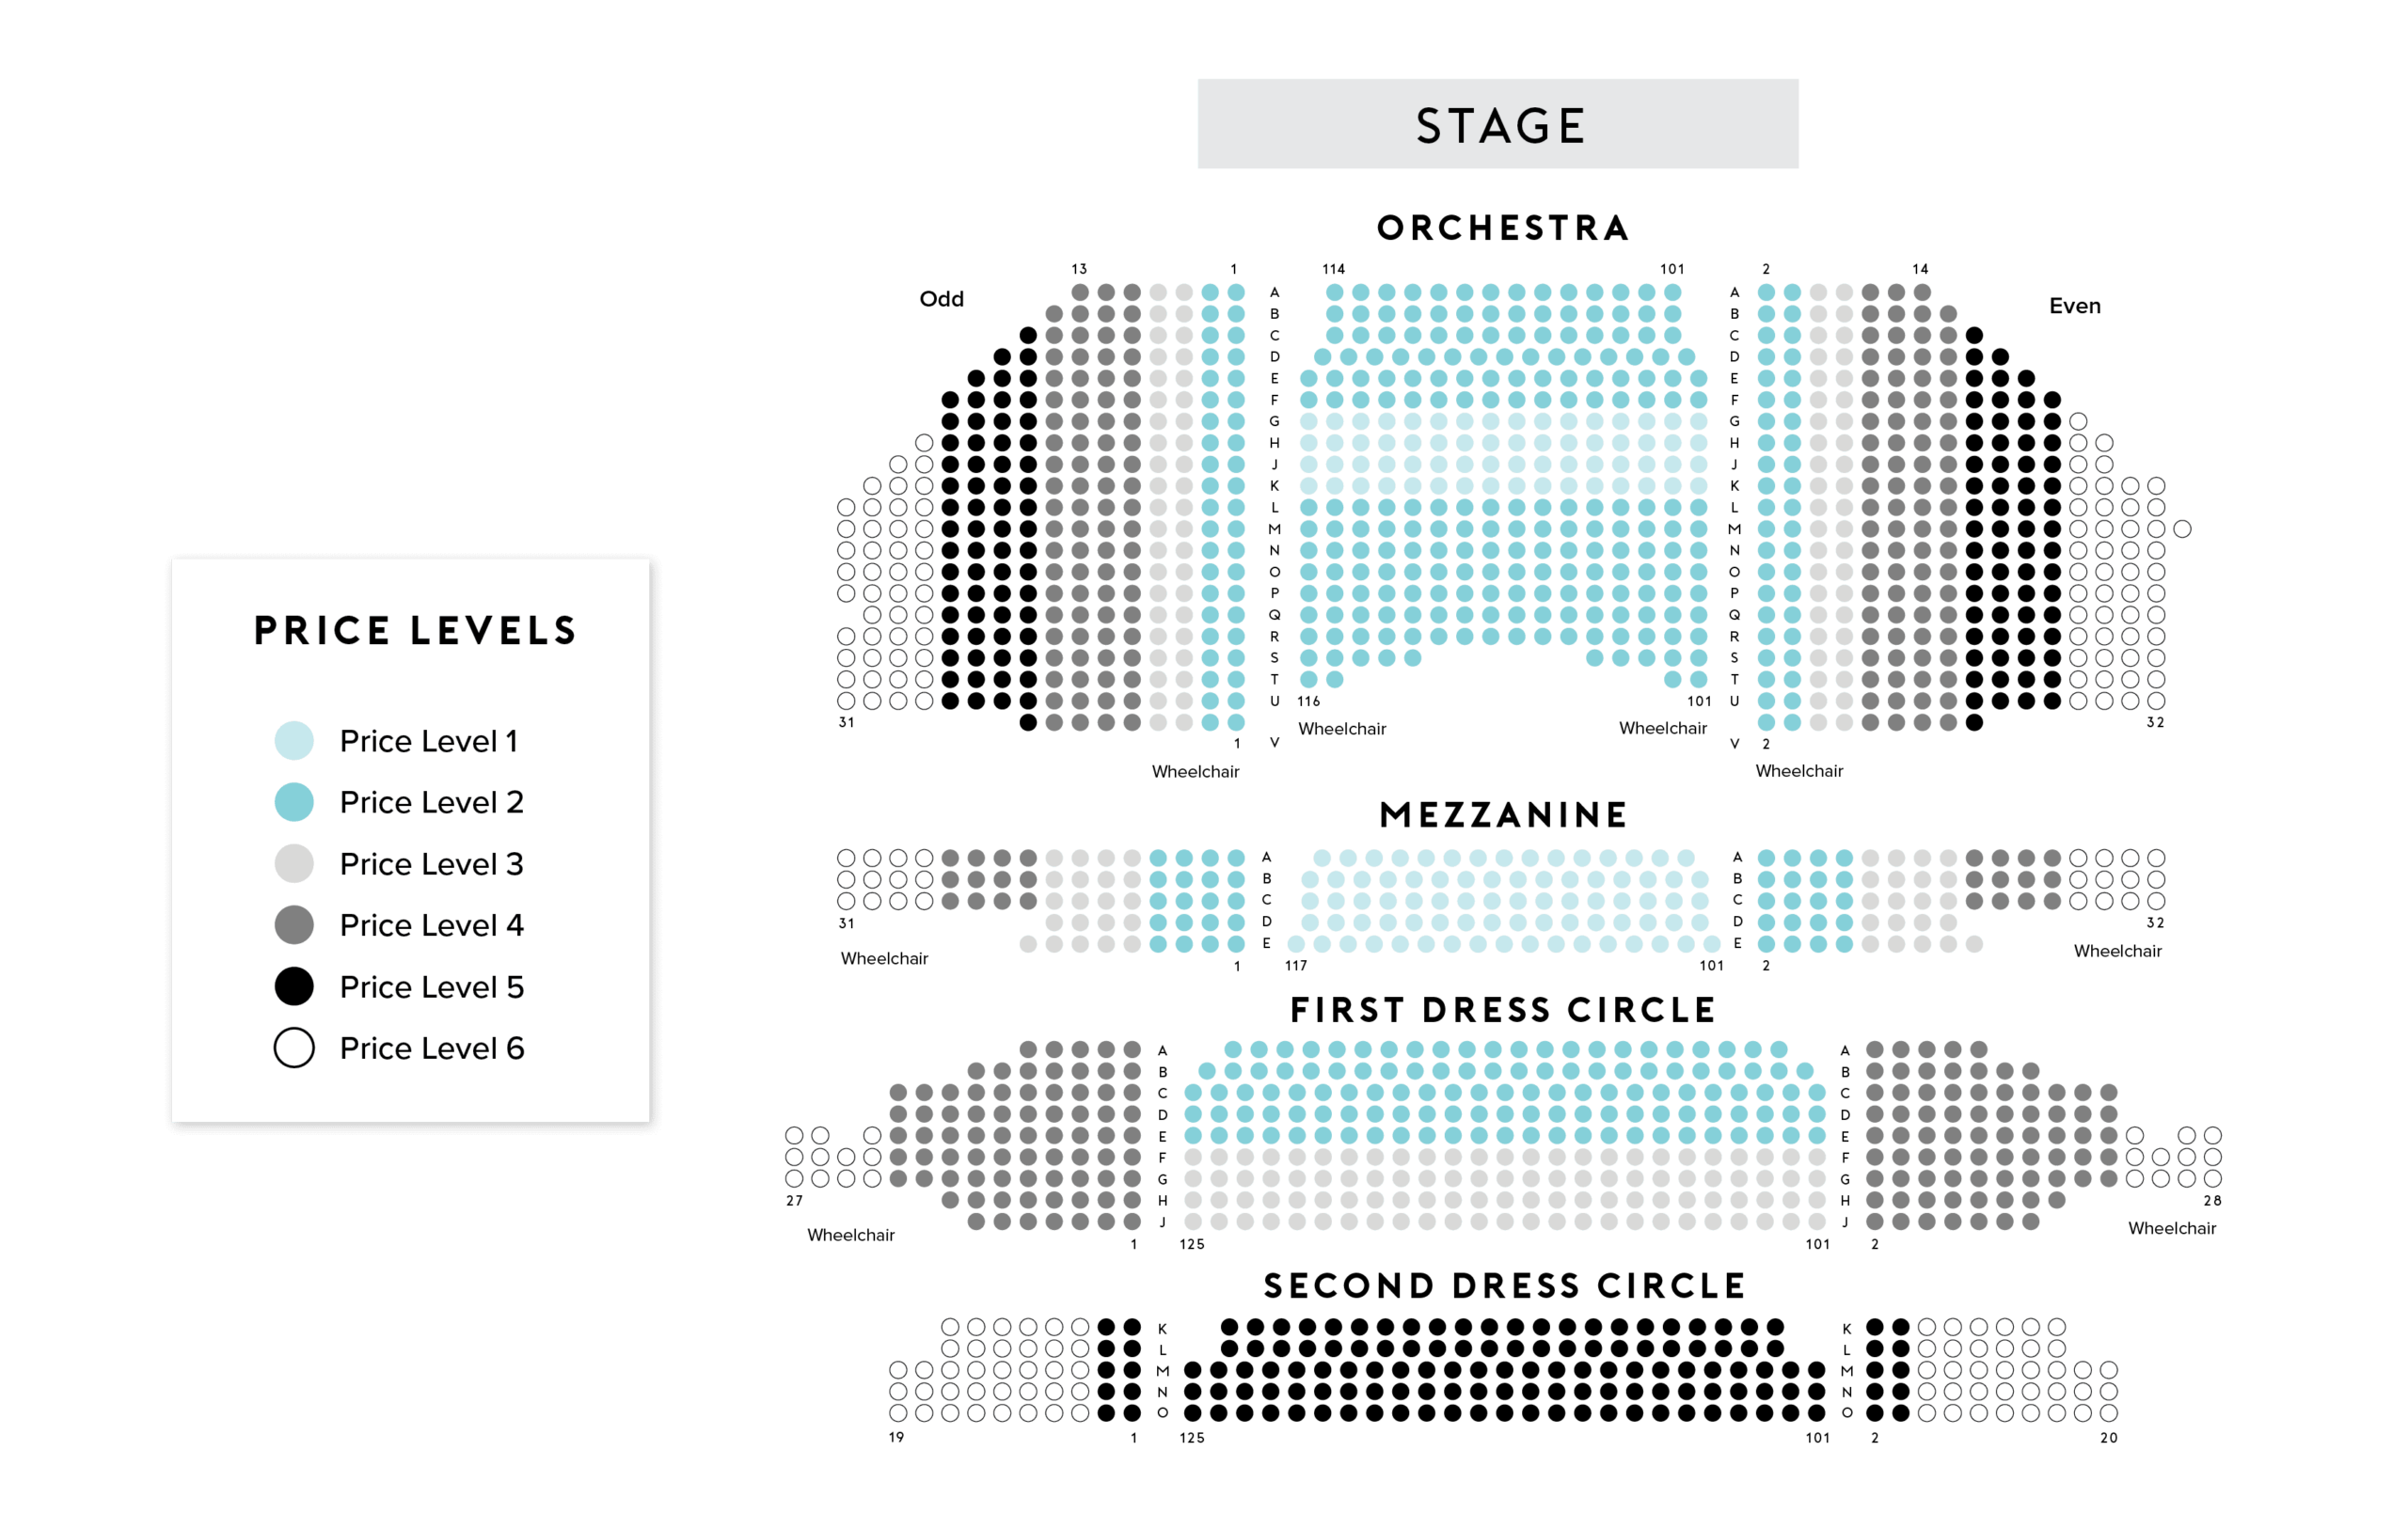 Richard And Carpenter Performing Arts Center Seating Chart